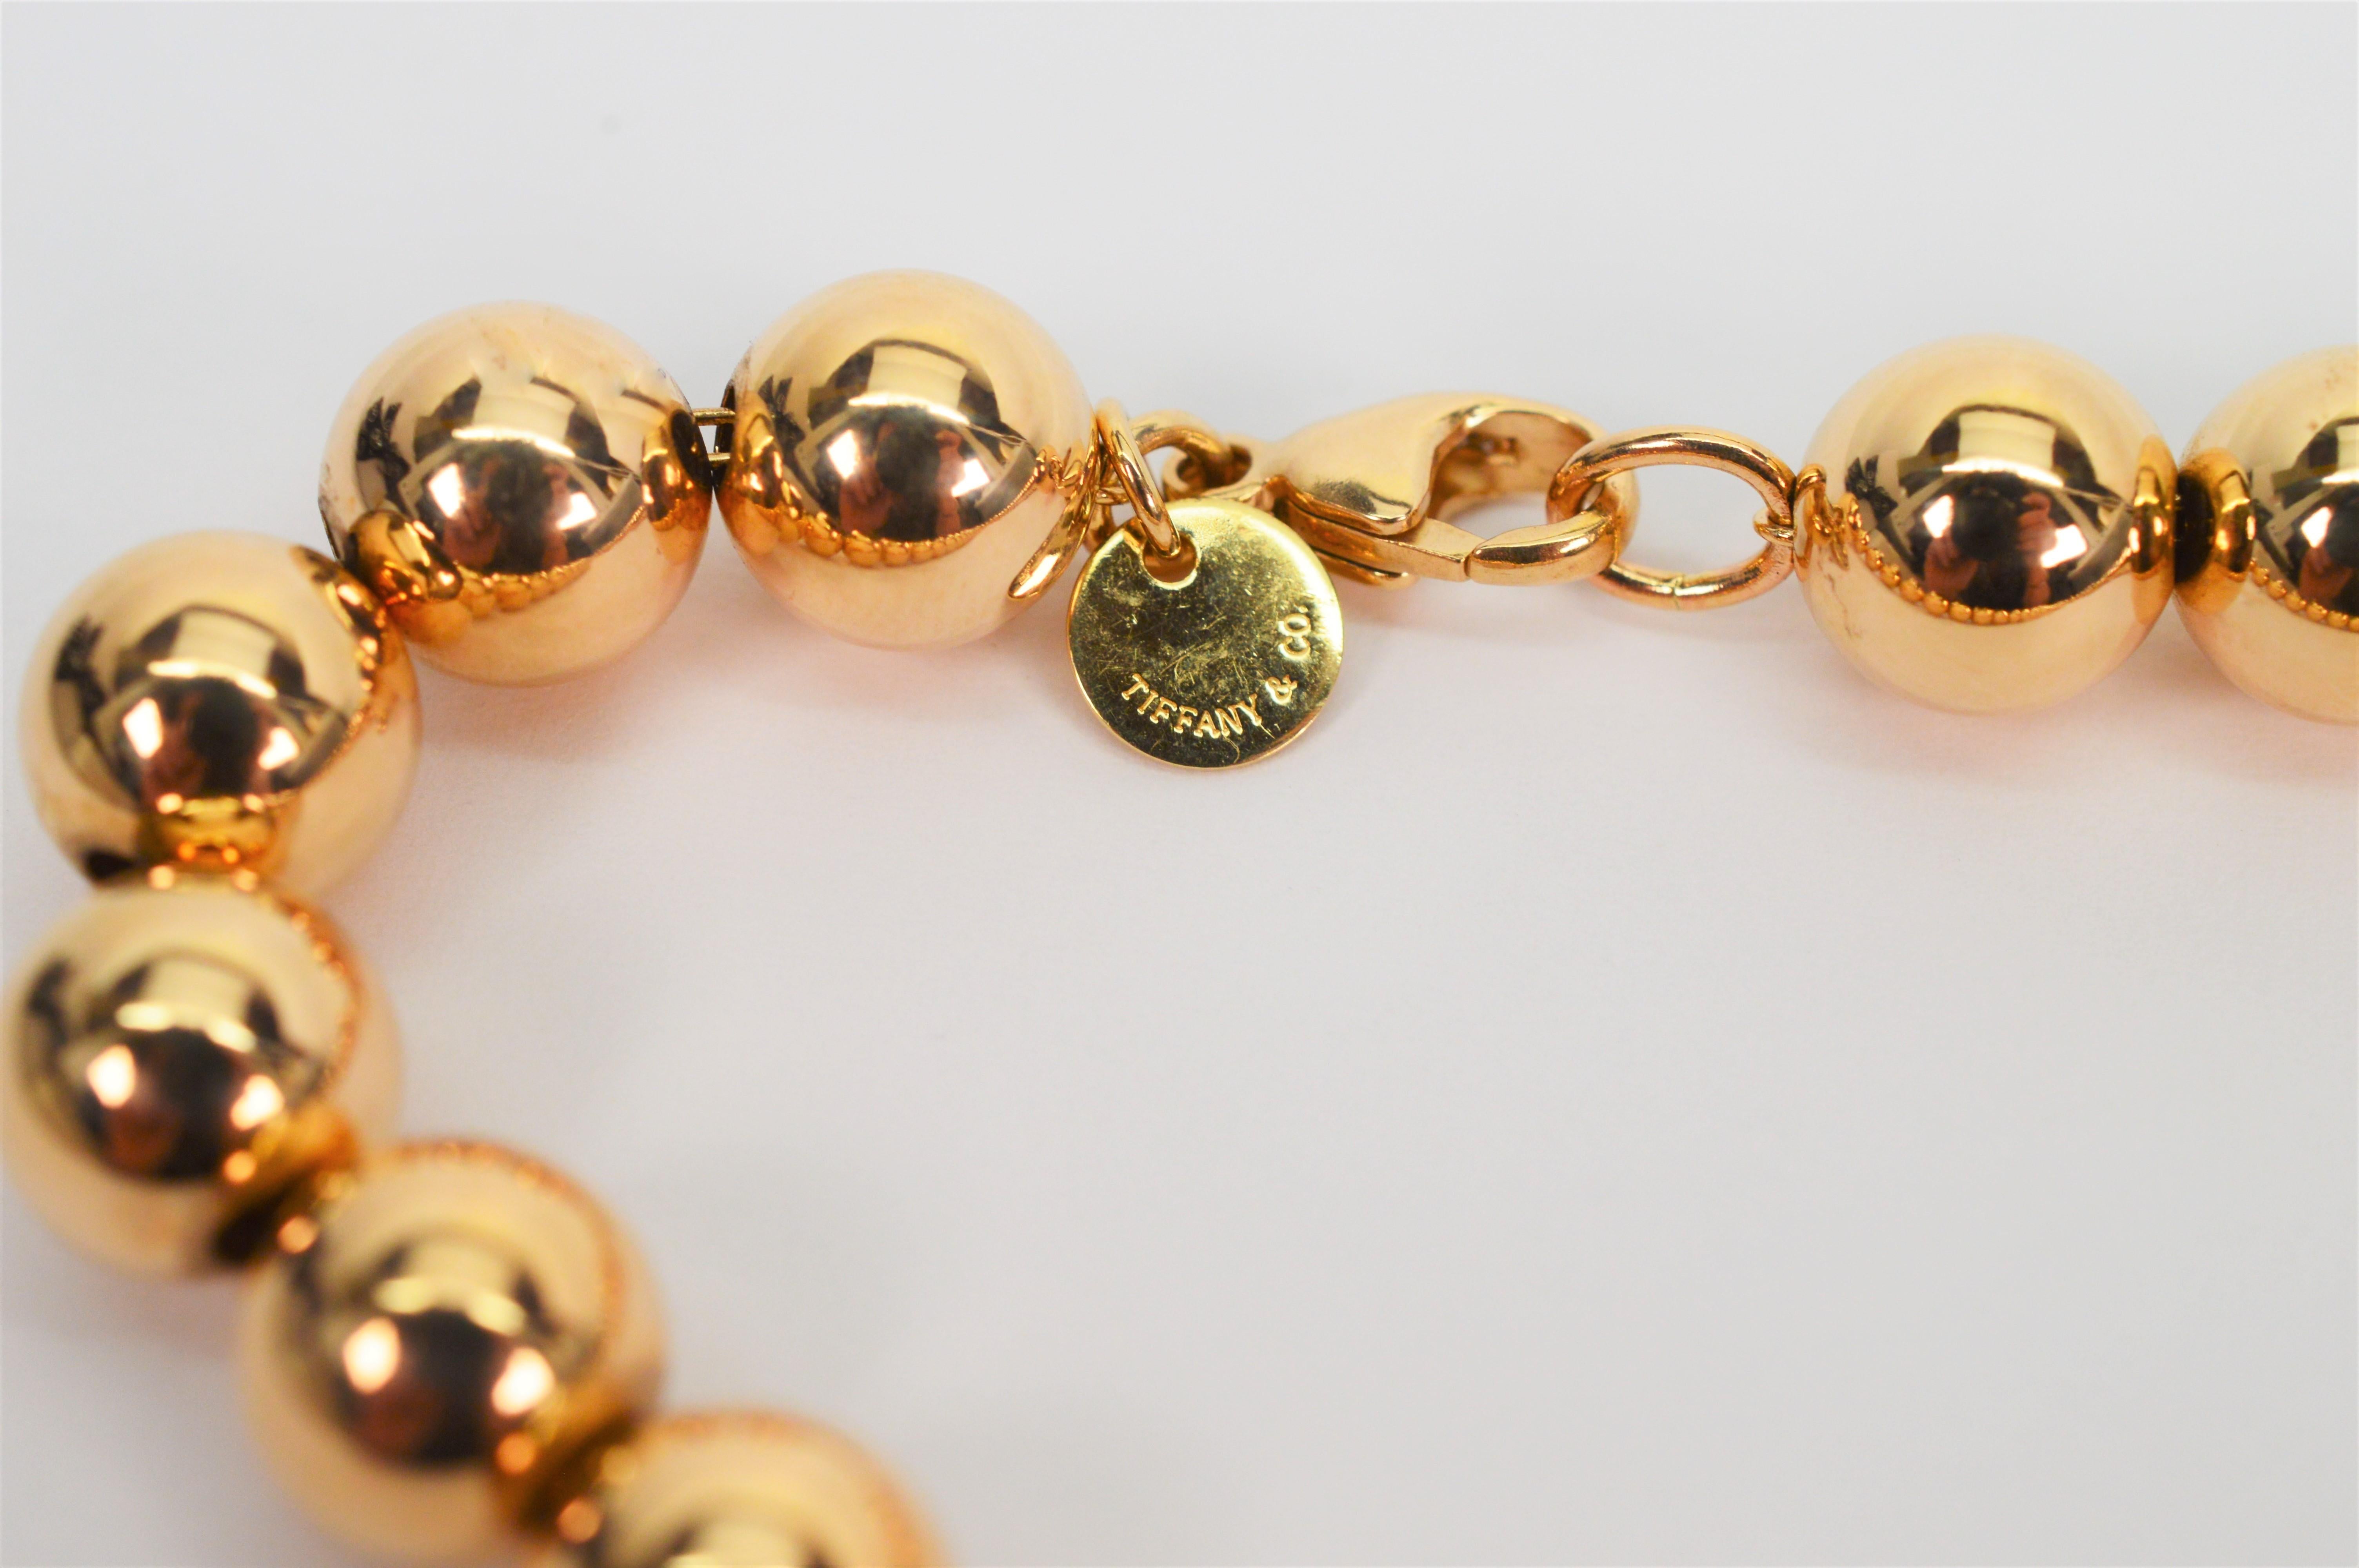 gold bead necklace tiffany